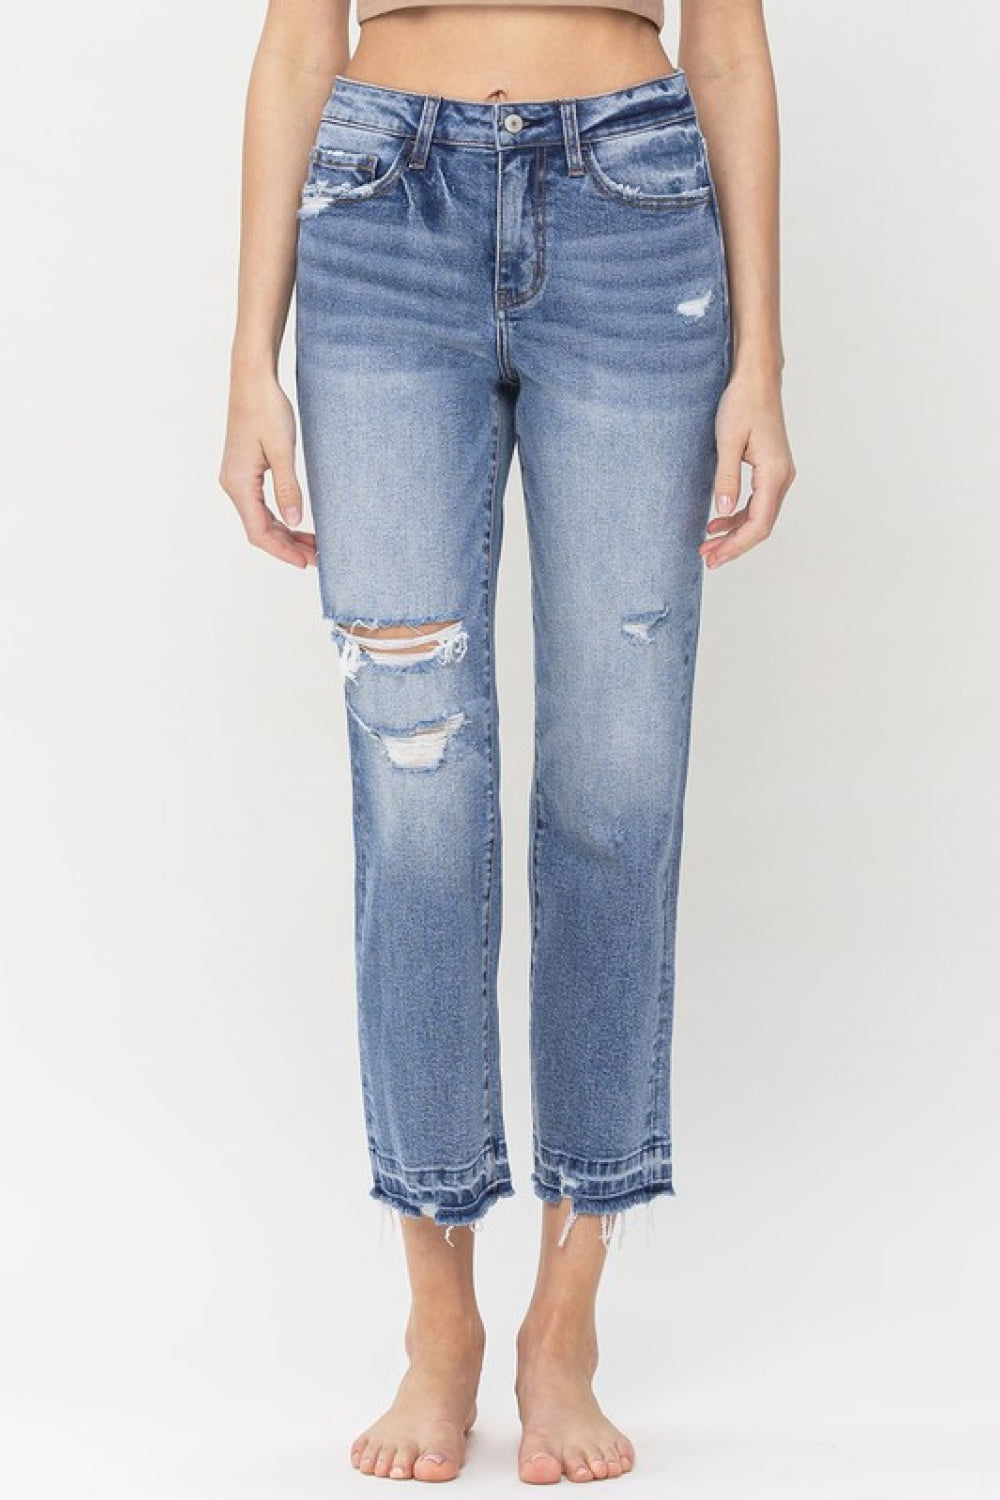 Lovervet "Lena" High Rise Crop Straight Jeans